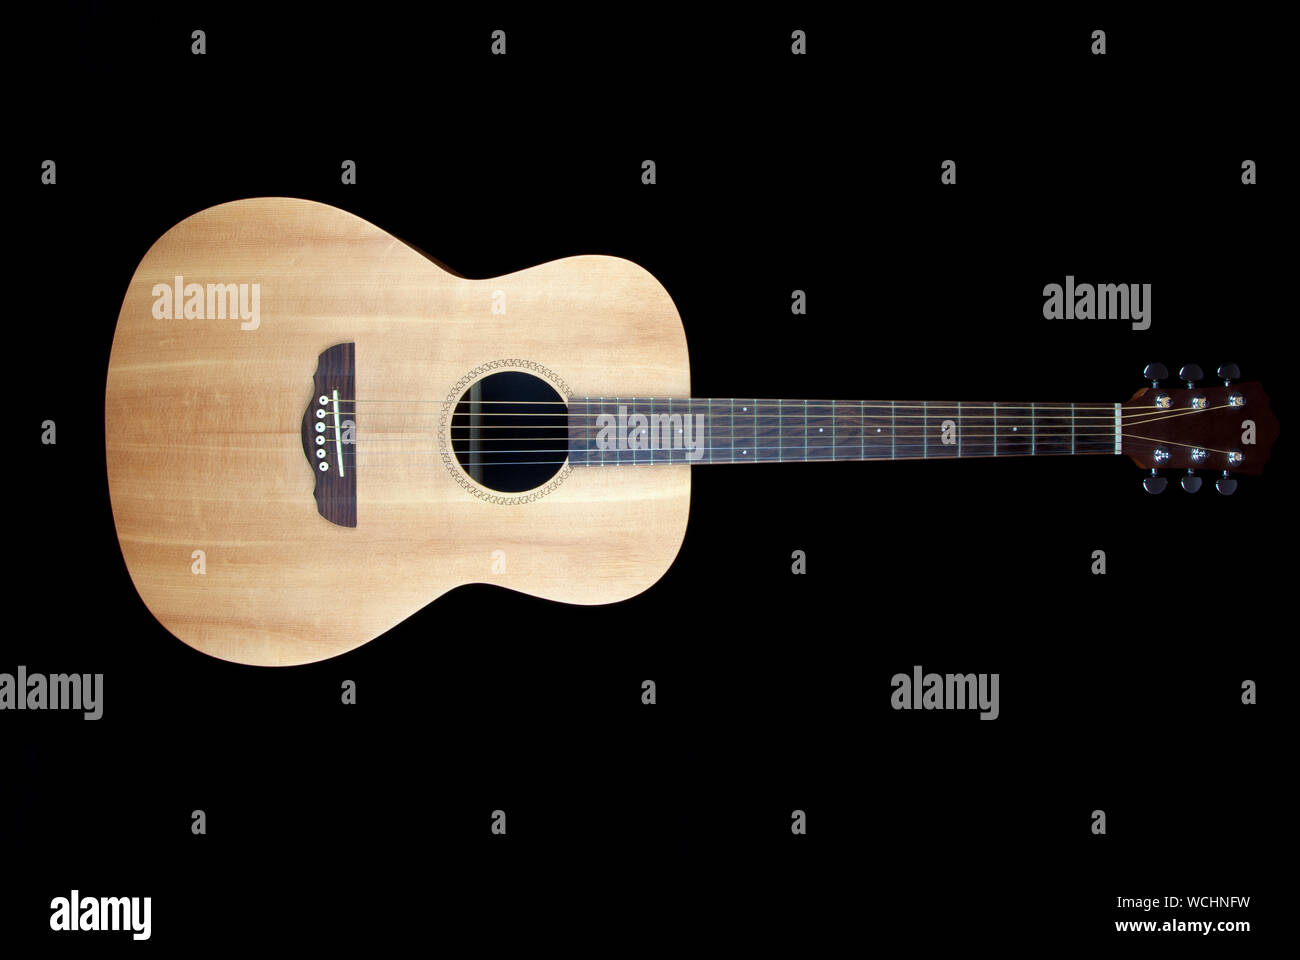 Acoustic folk guitar against black background. Stock Photo